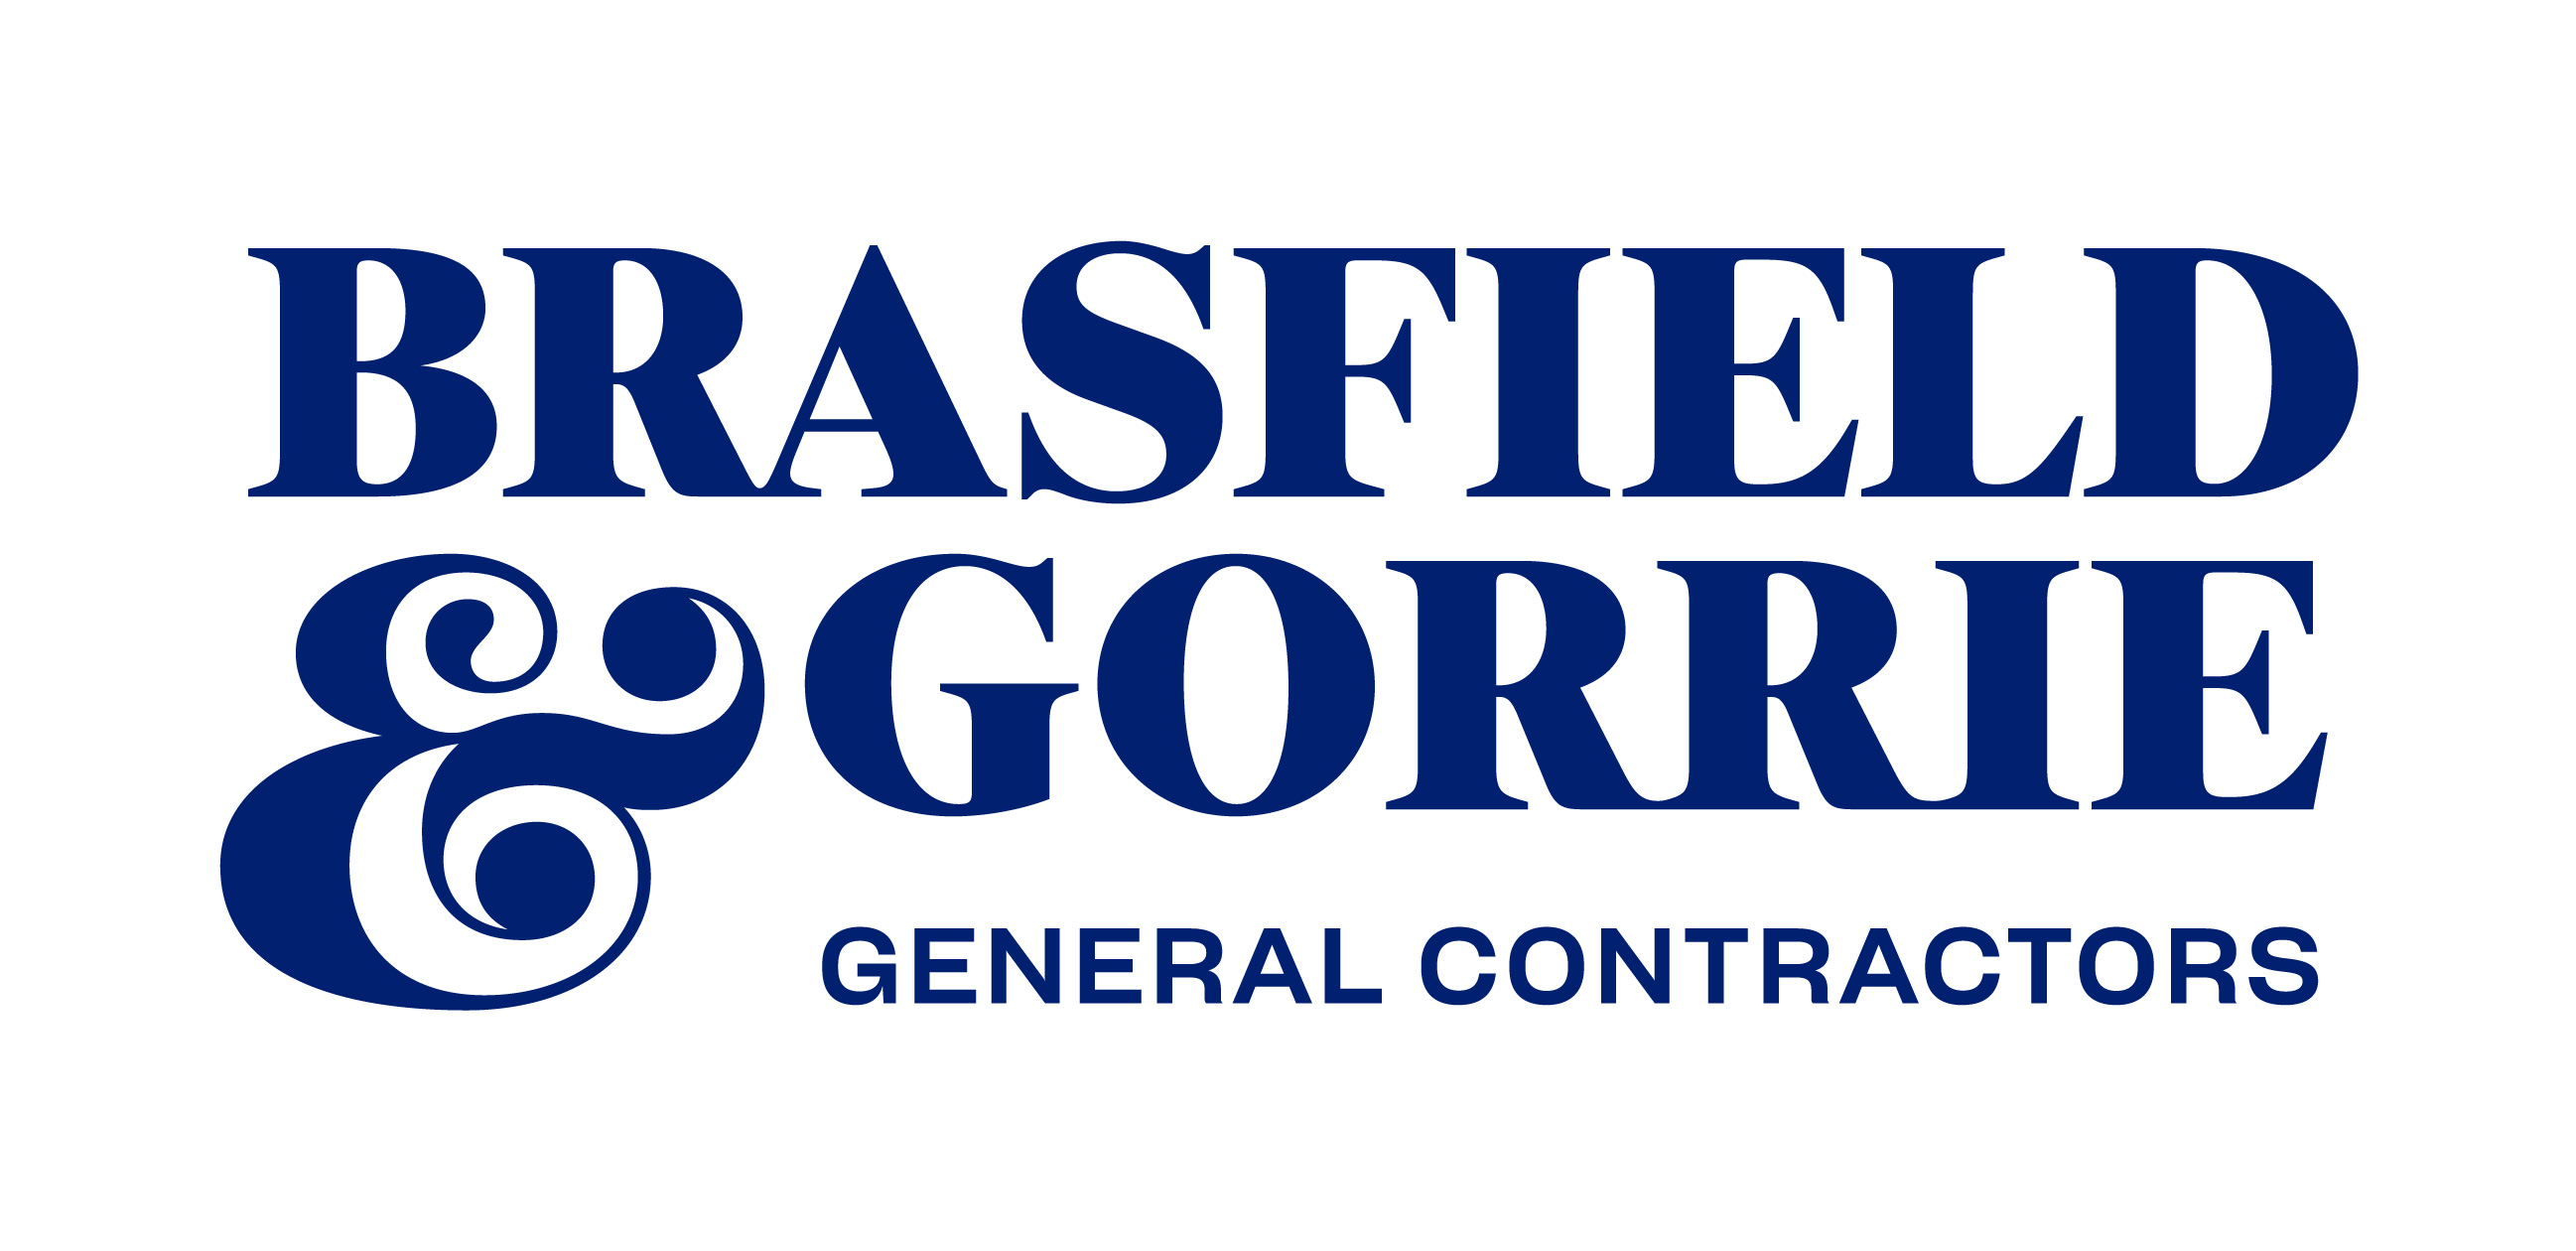 Brasfield & Gorrie Company Logo